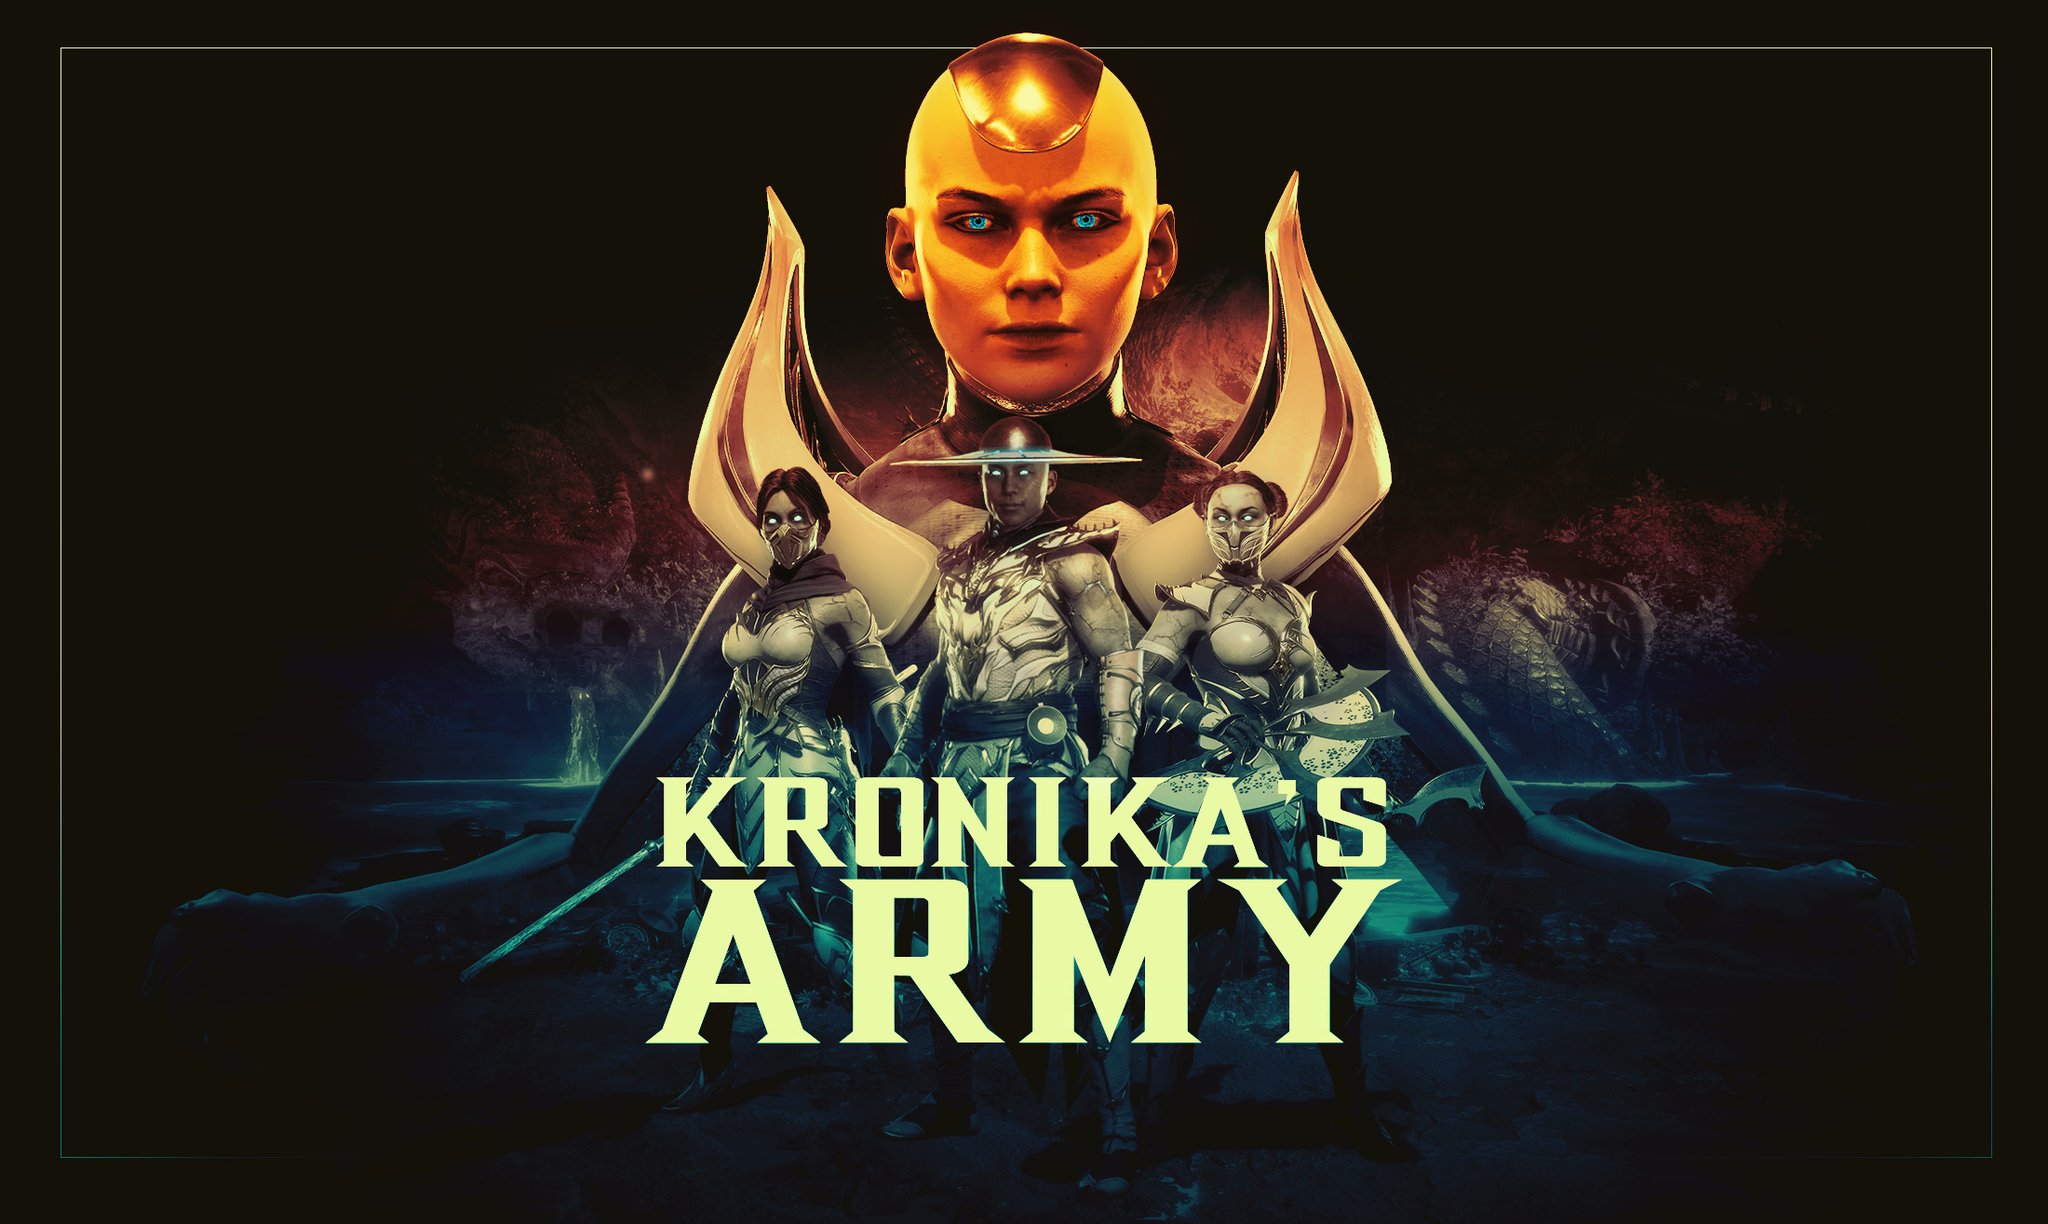 MK11 background - Kronikas's Army